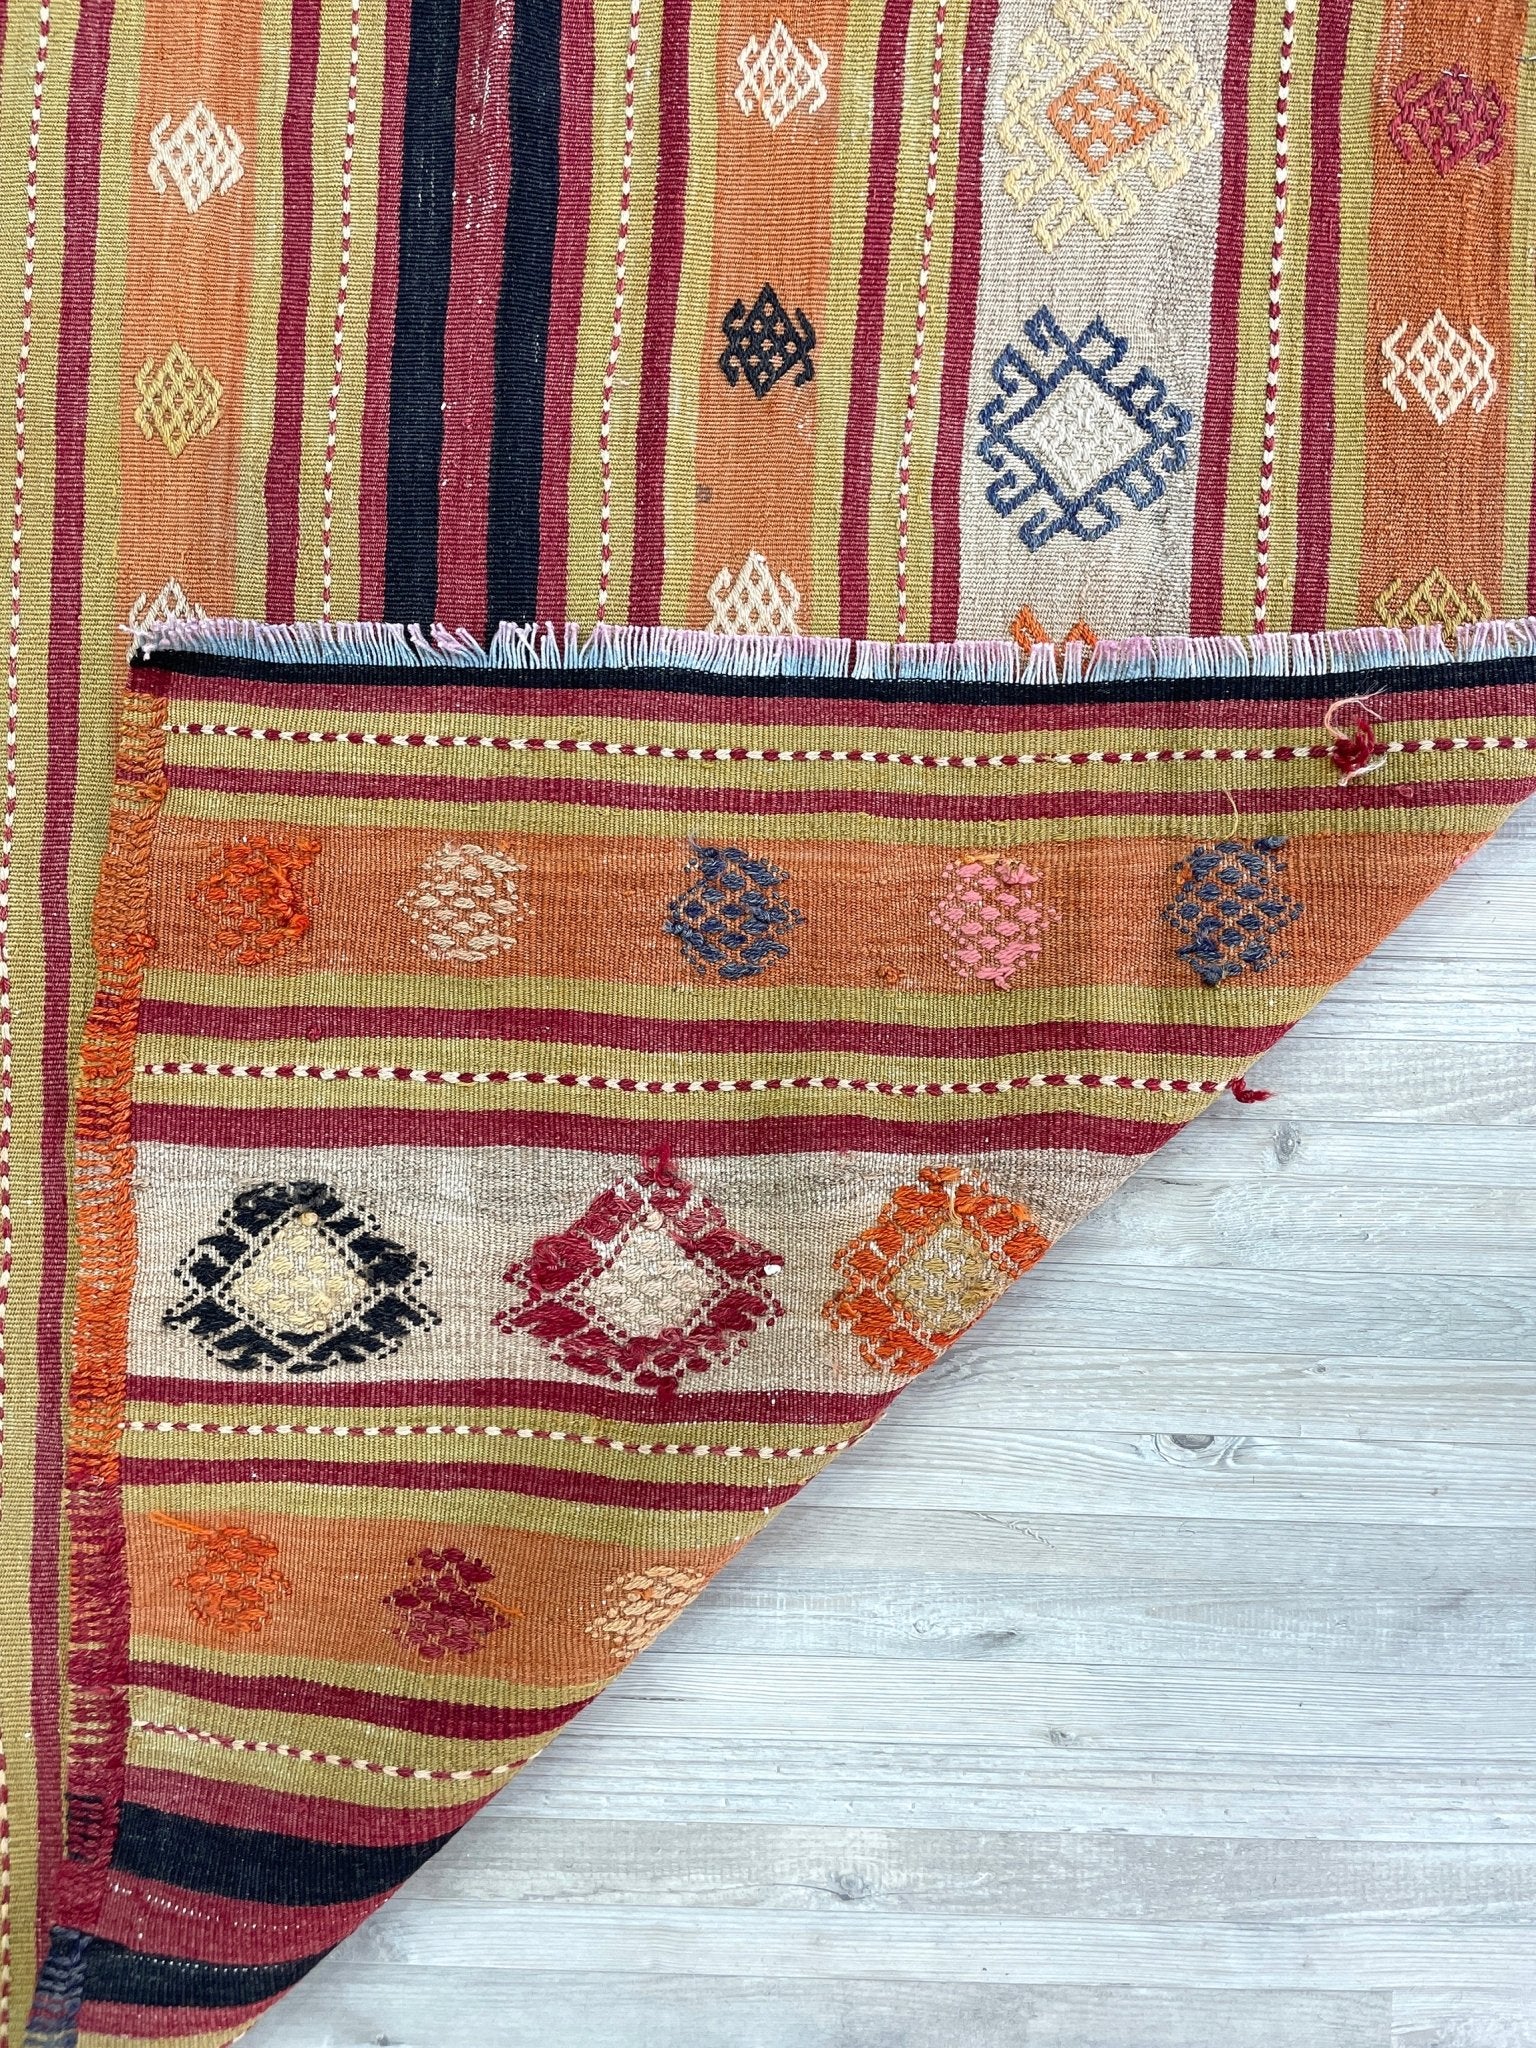 Sivas wool handmade vintage turkish runner kilim rug shop san francisco bay area. Oriental rug store palo alto berkeley.